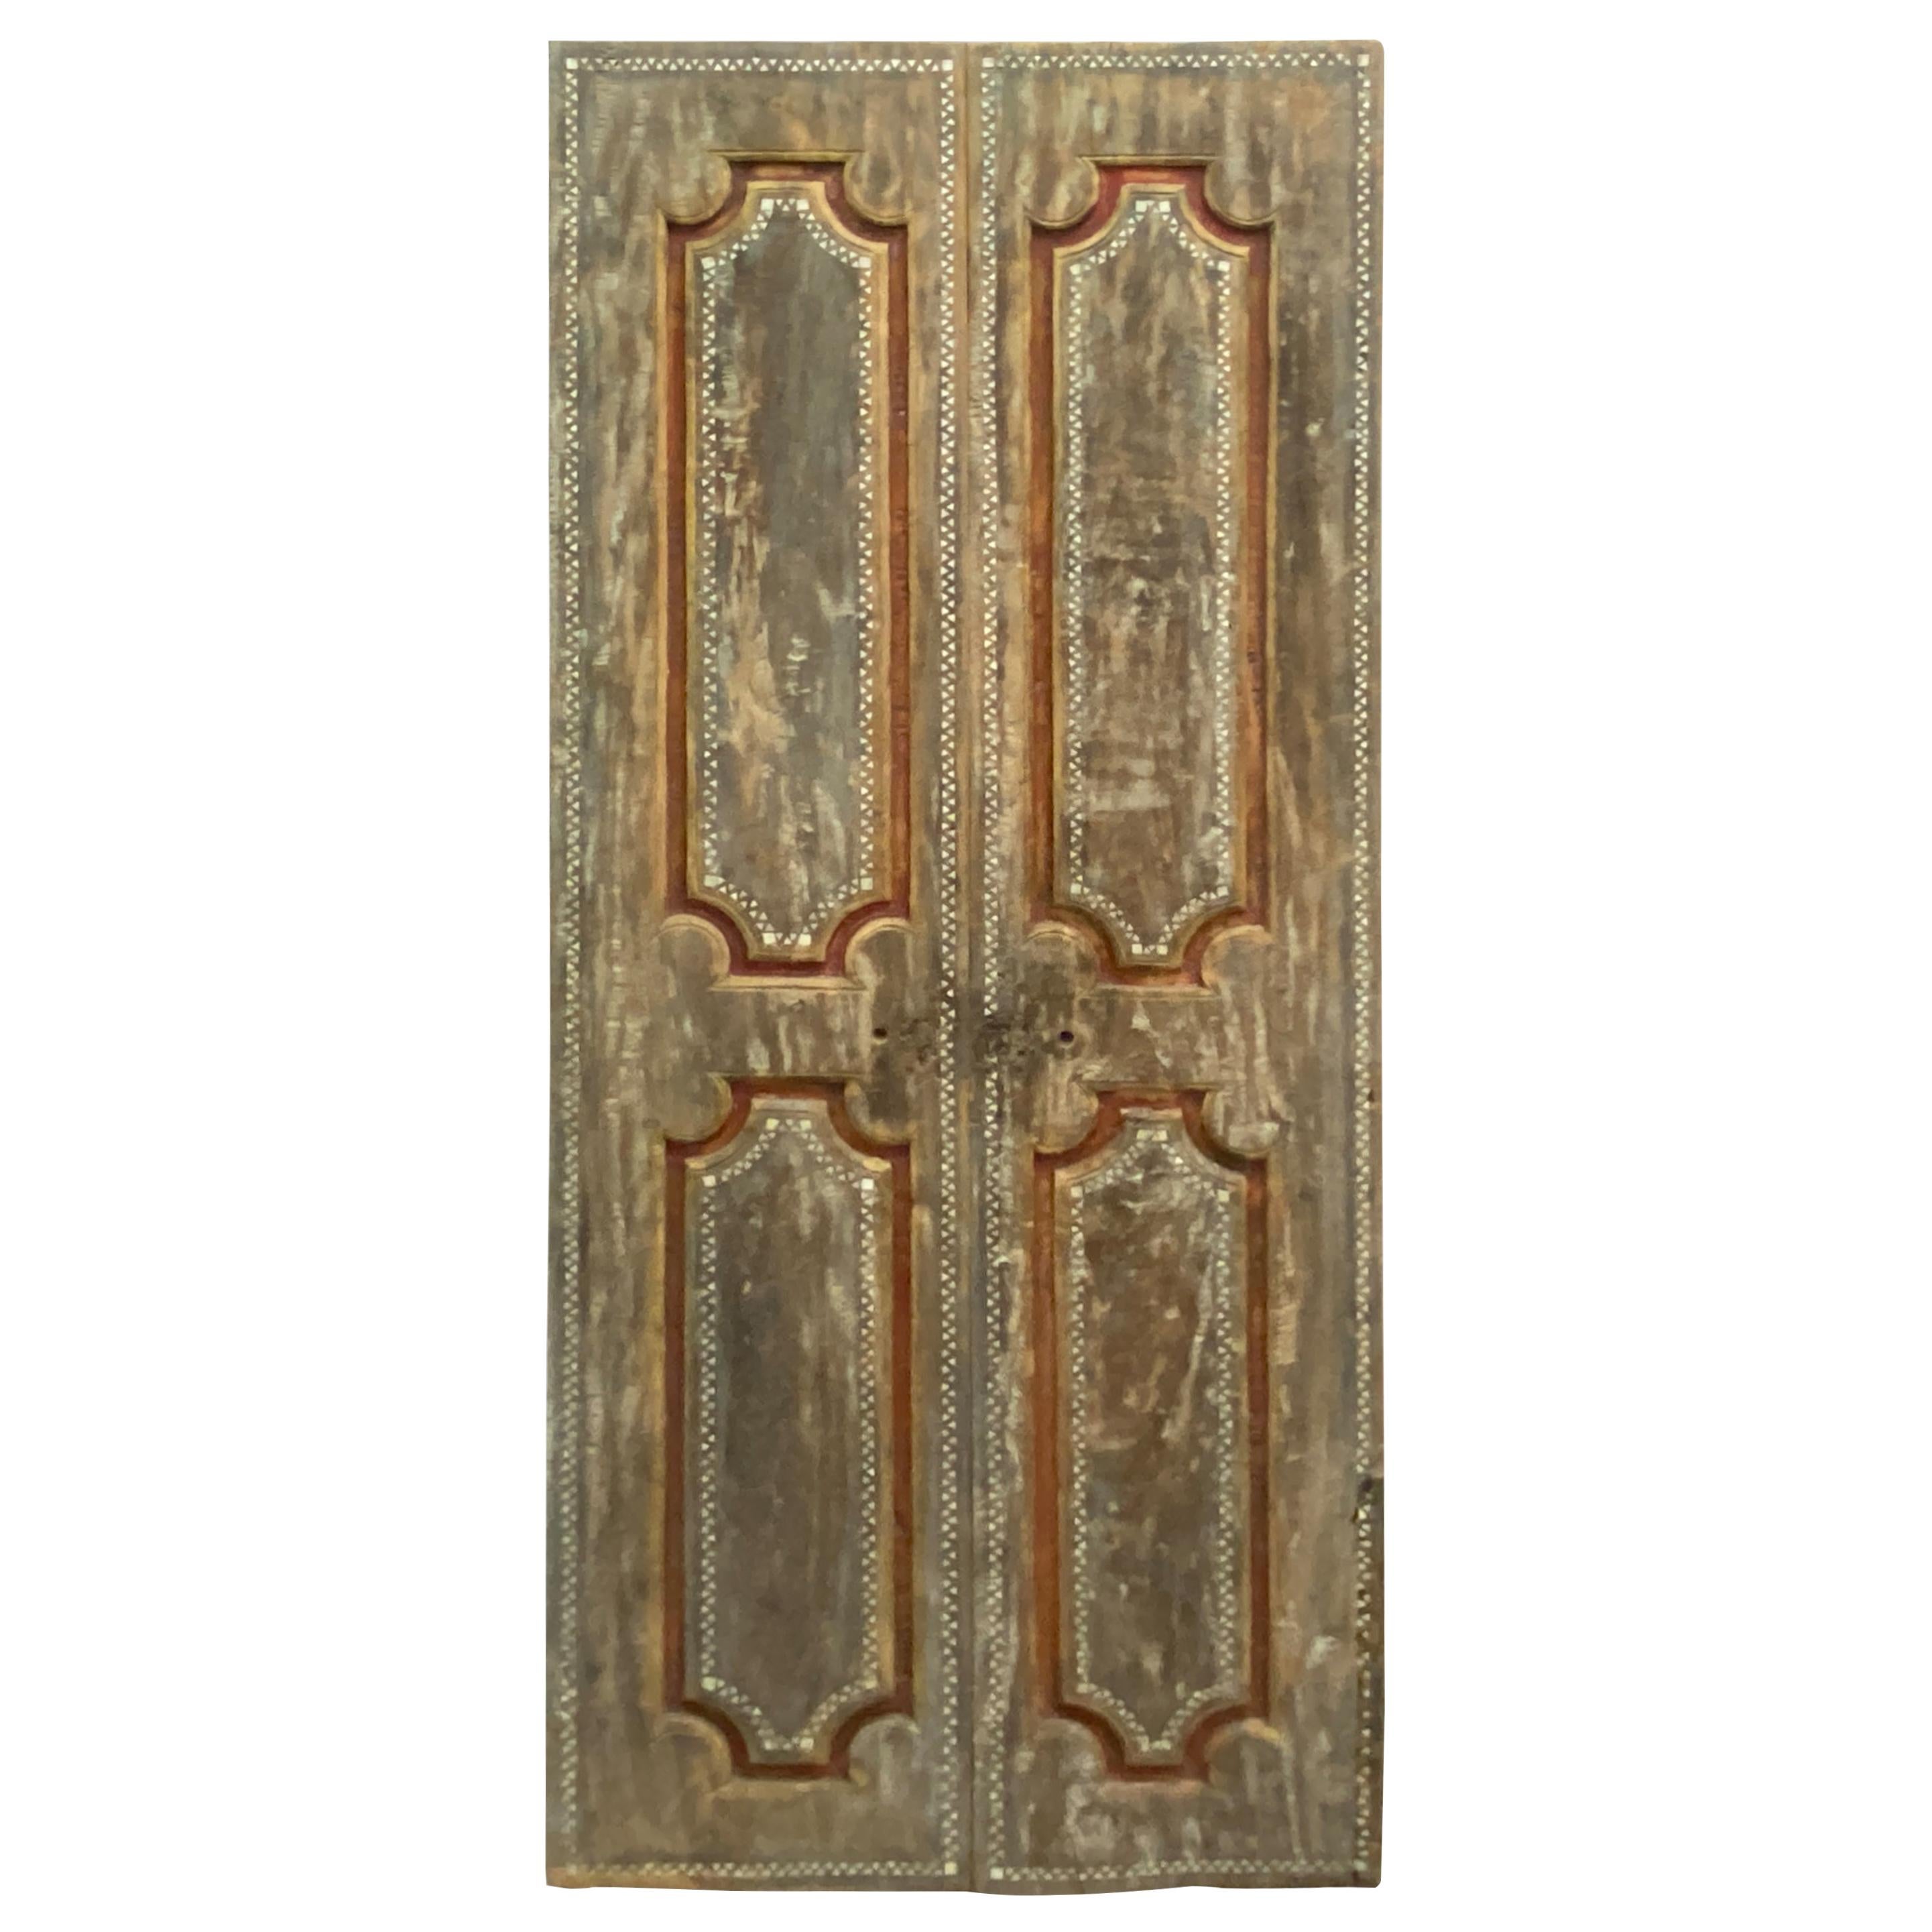 Andrianna Shamaris Antique Teak Wood Temple Door with Shell Inlay